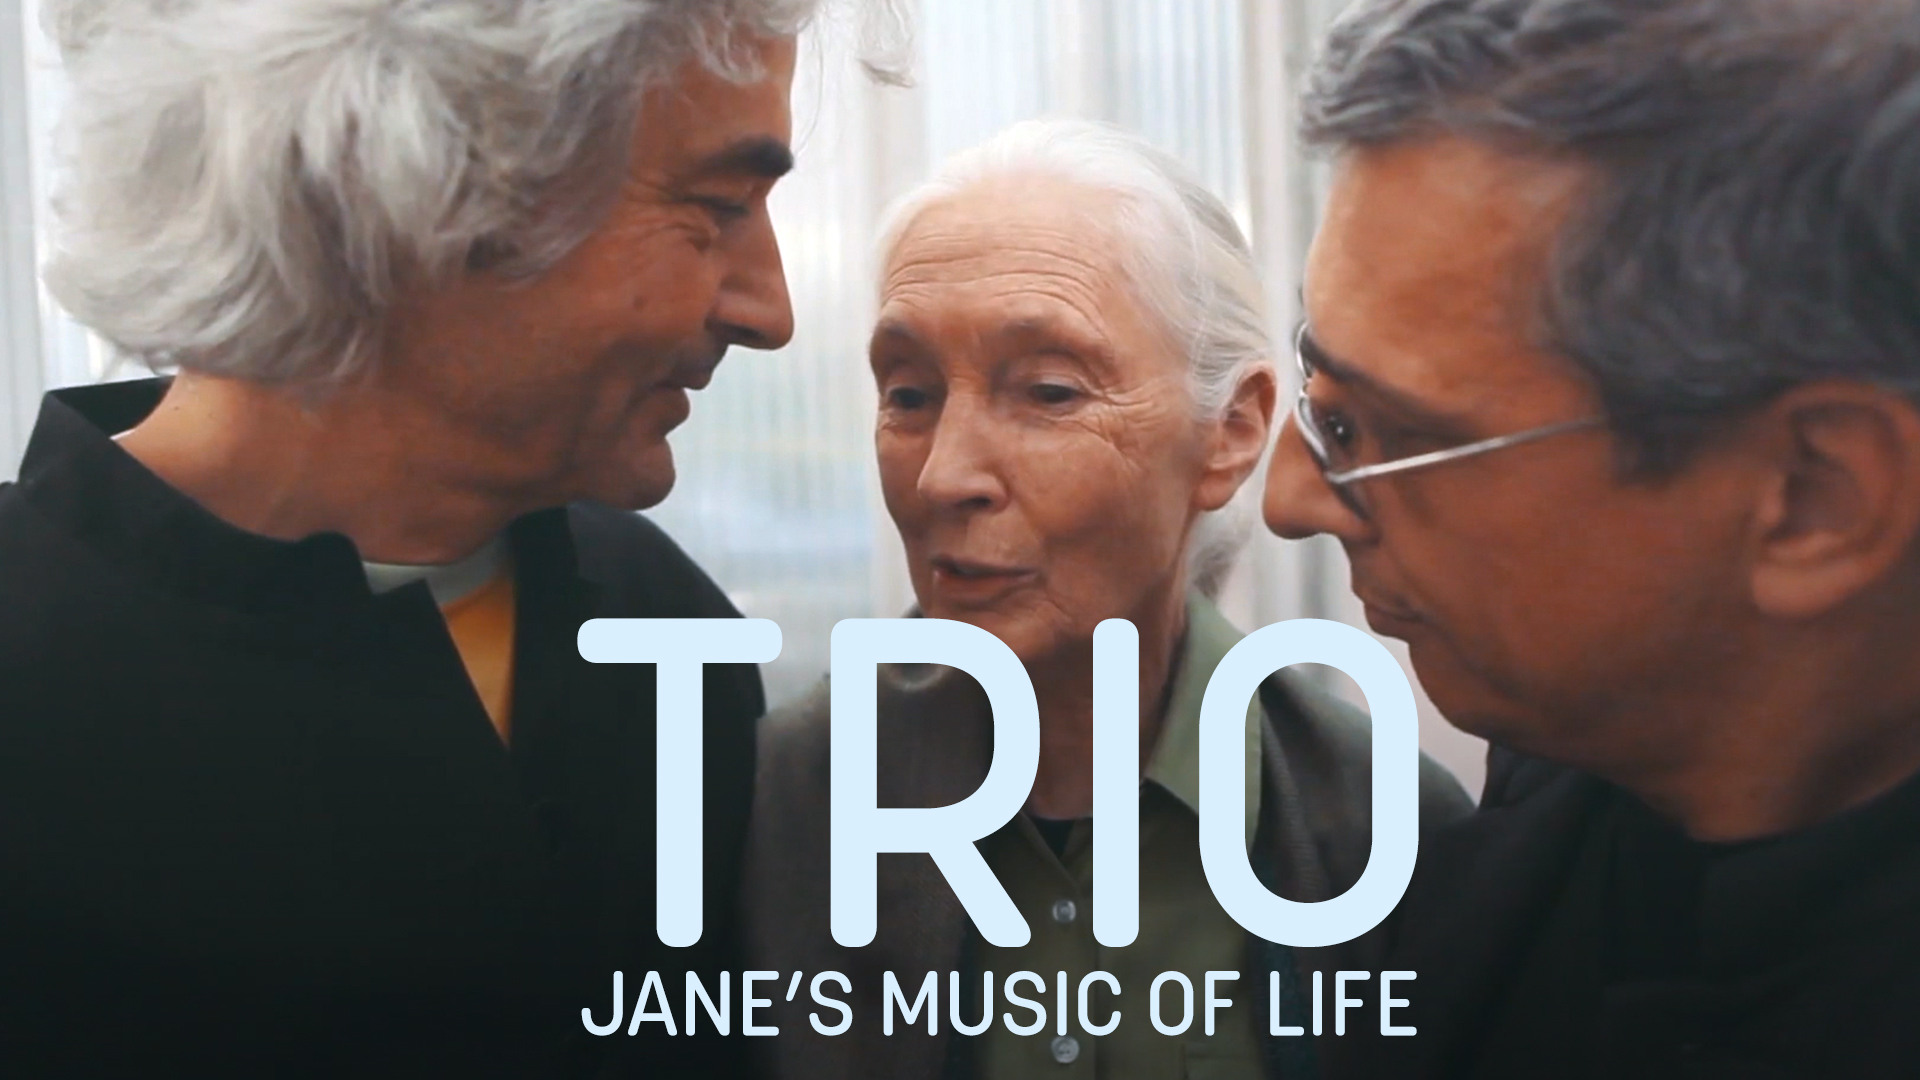 TRIO "JANE'S MUSIC OF LIFE"